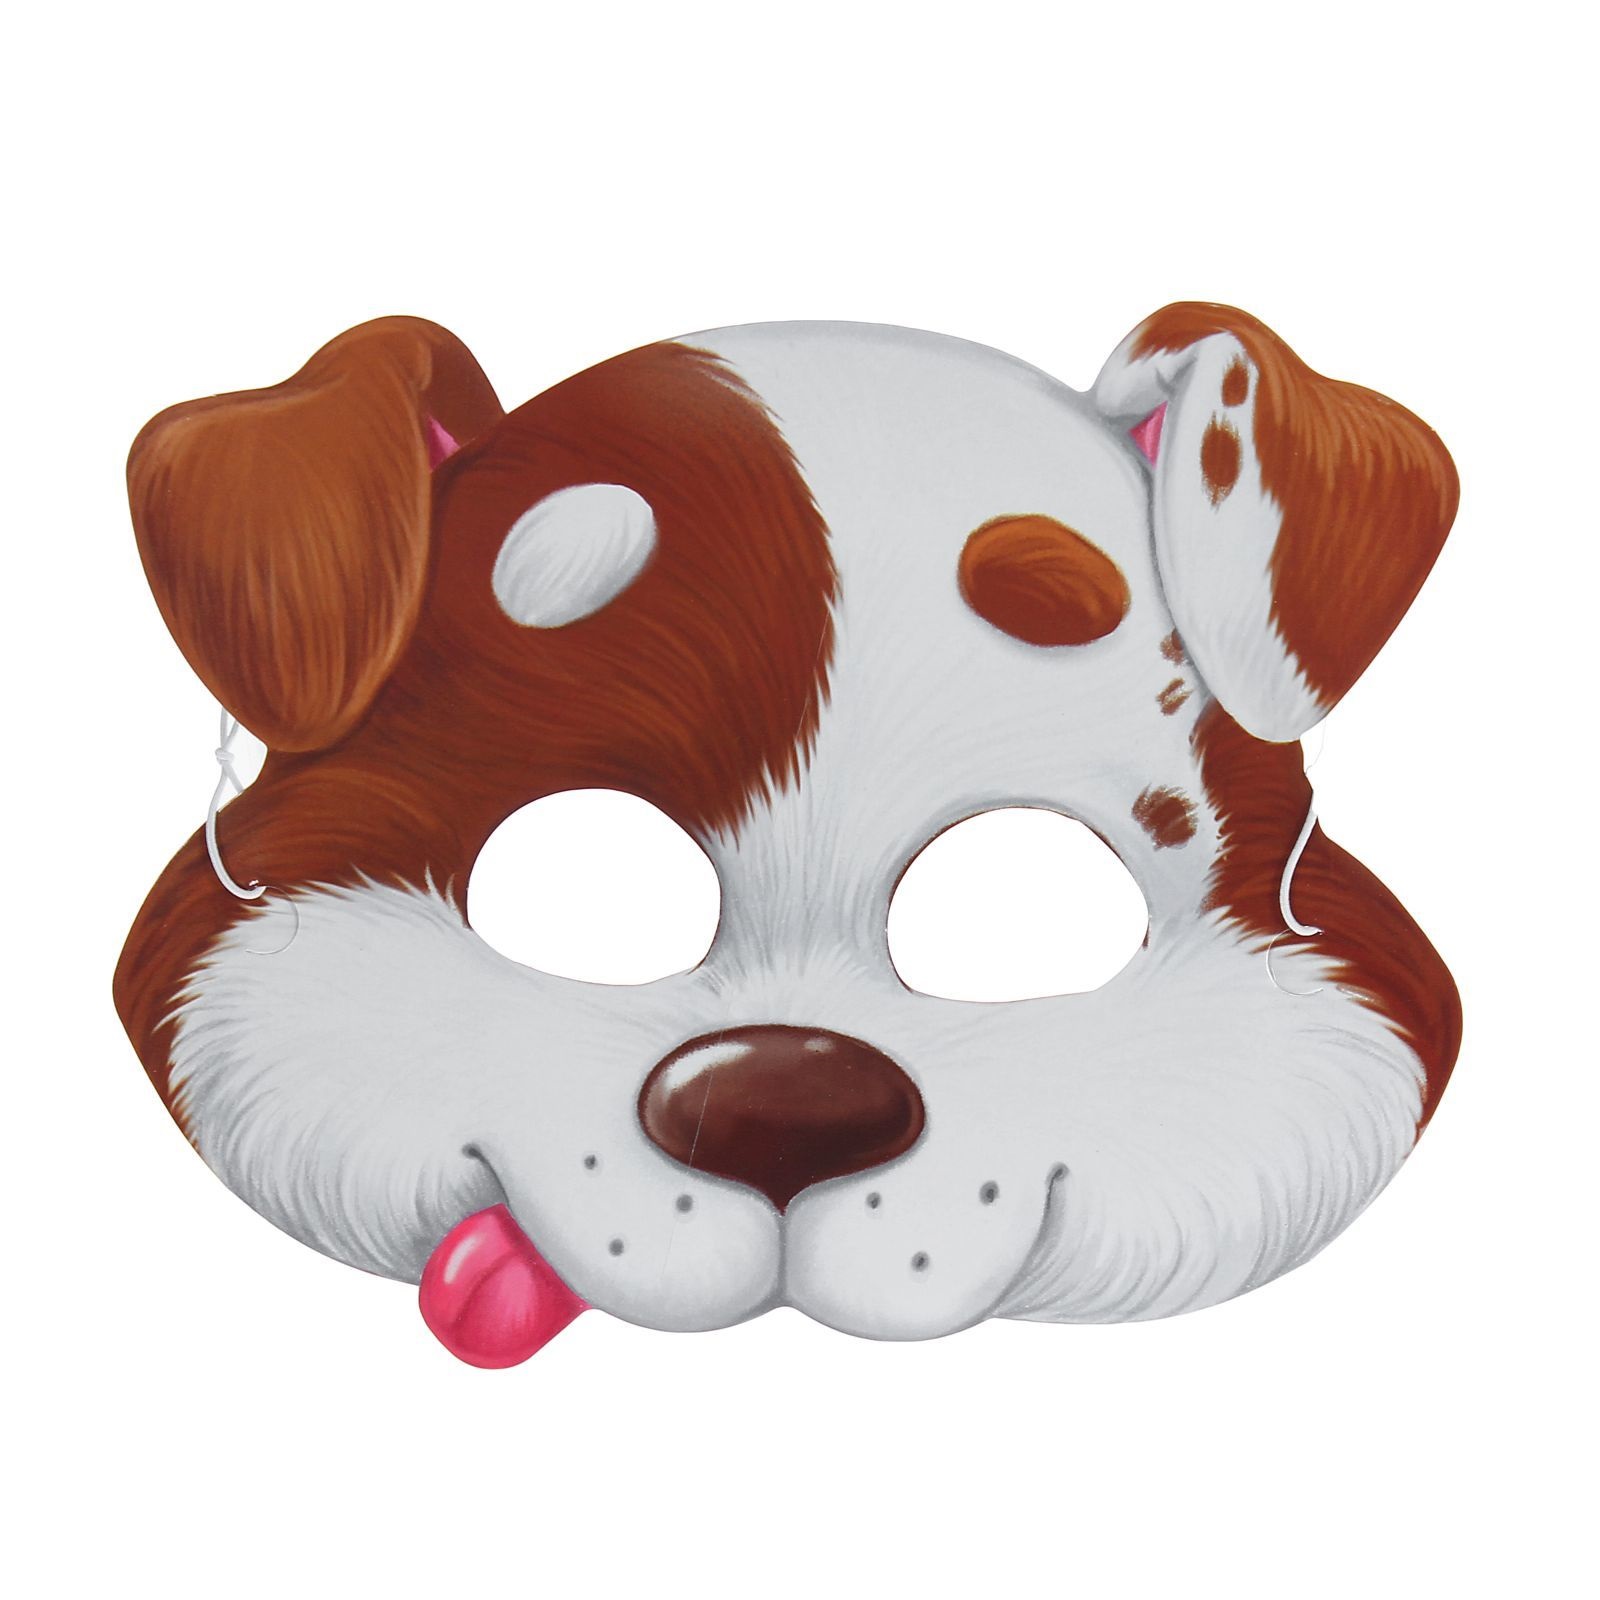 Маска собаки на голову. Маски животных. Маска собаки. Карнавальные маски для детей. Новогодние маски животных.